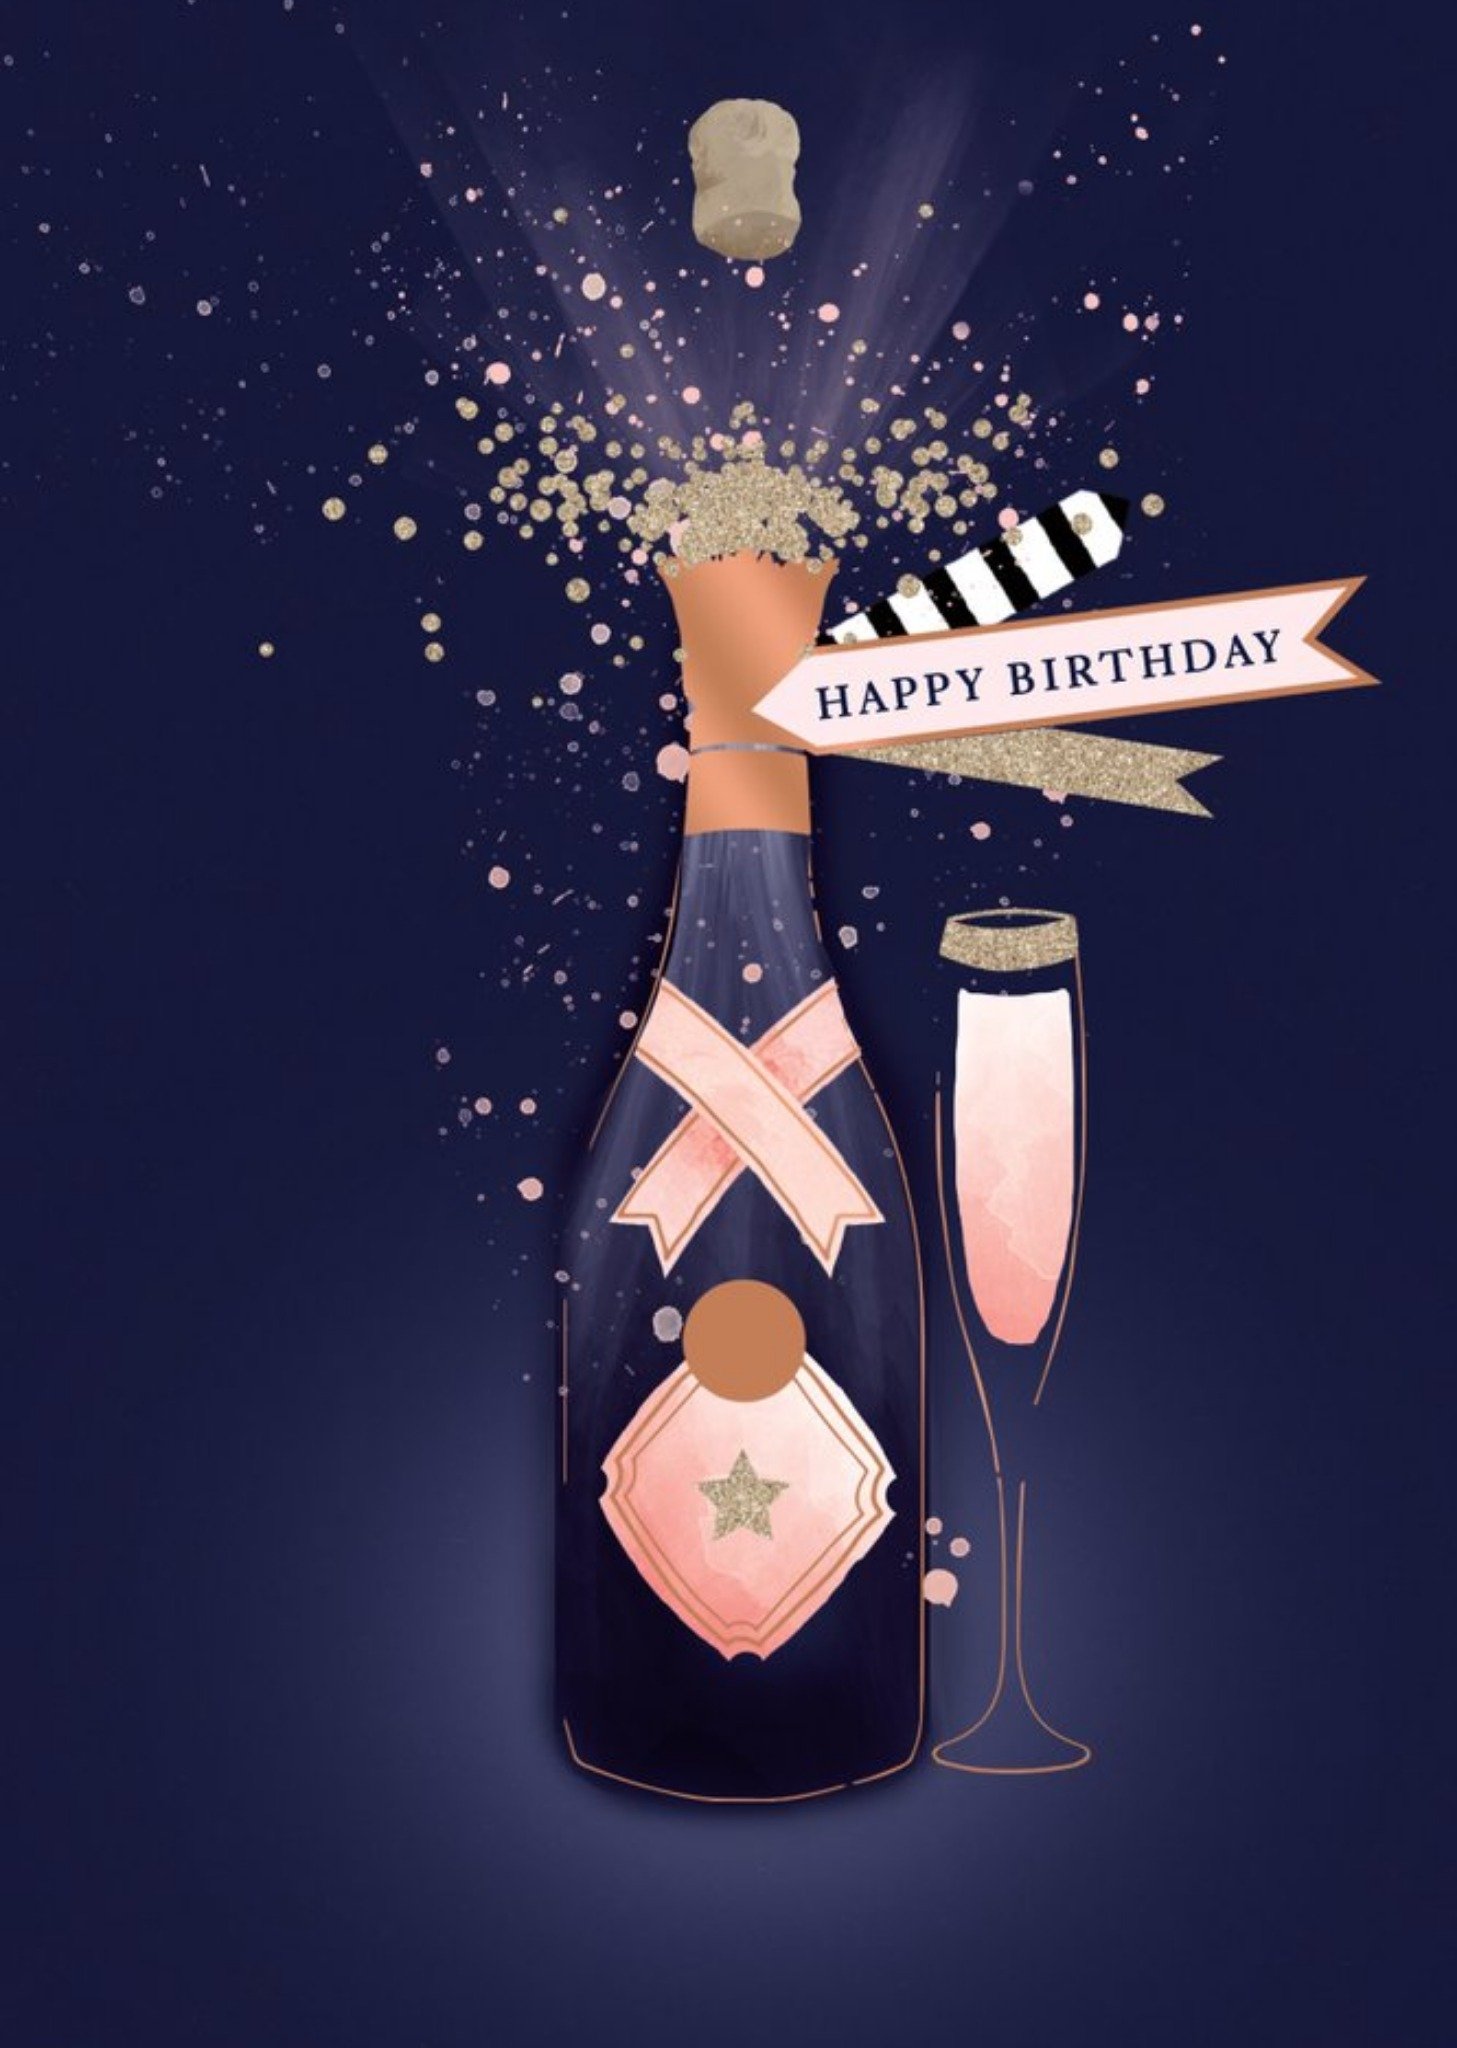 Friends Ukg Glass Celebrate Champagne Birthday Card, Large